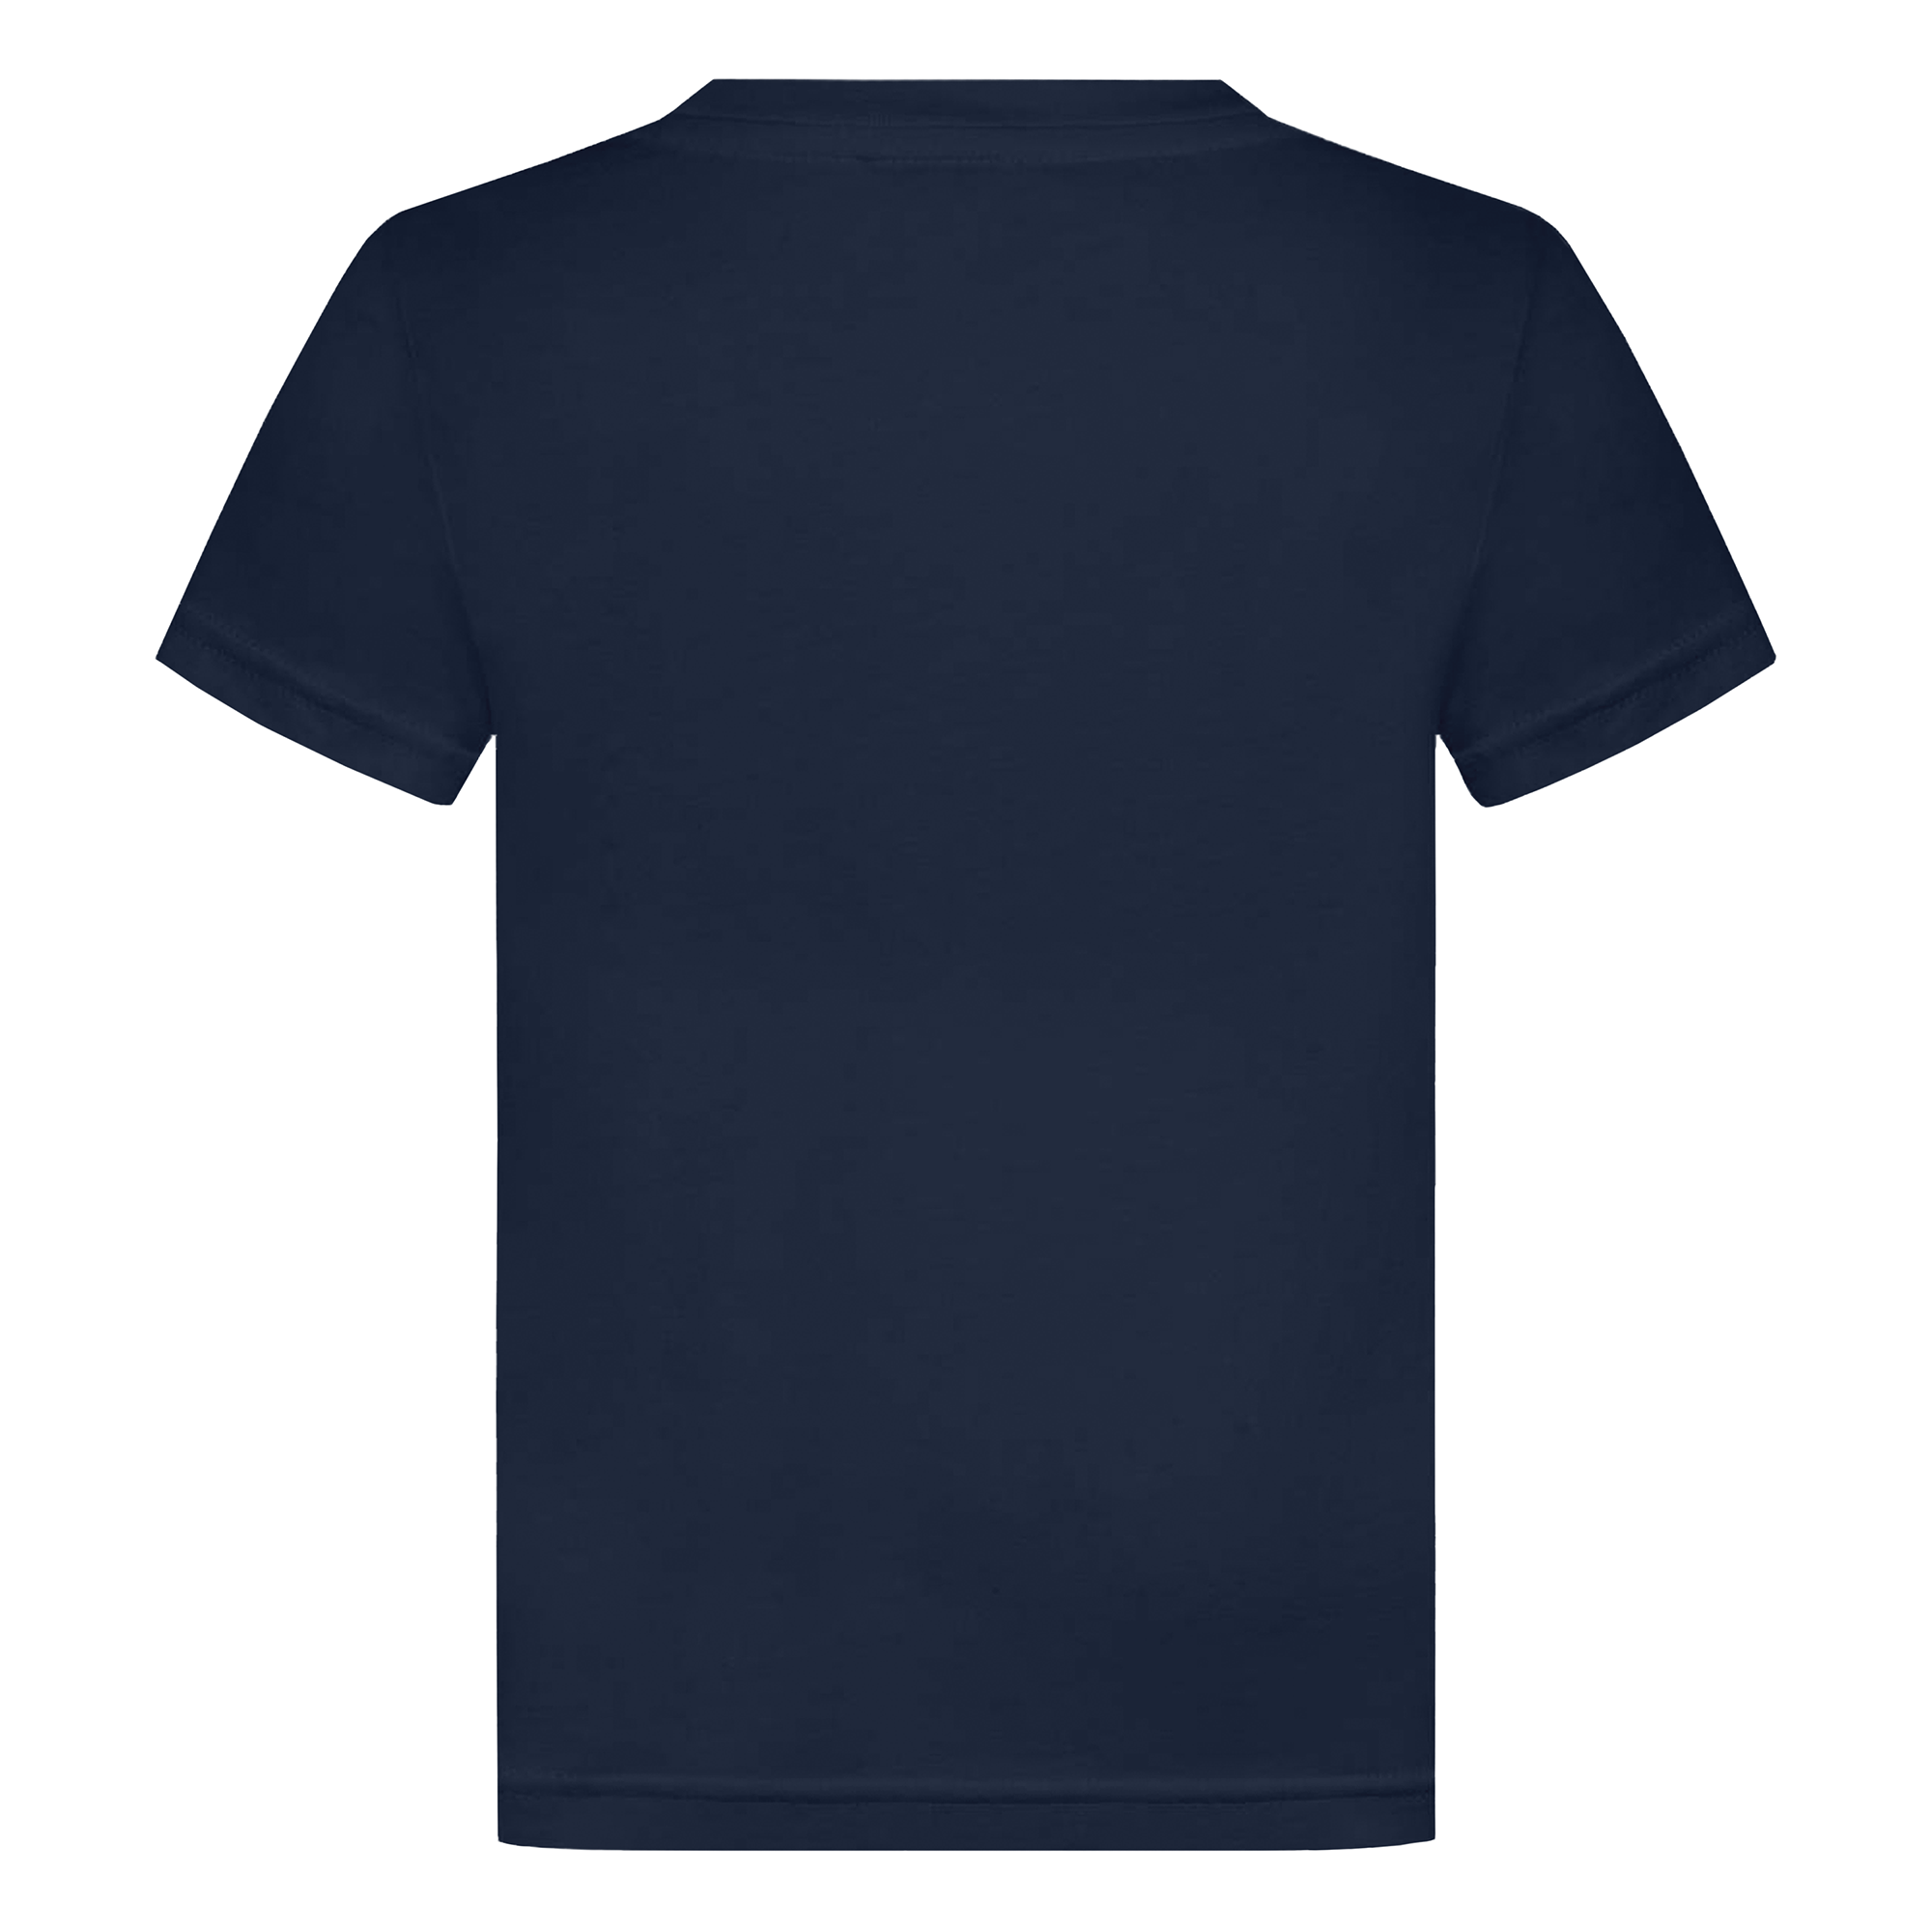 Messi Rainbow Gradation Logo Kid's Graphic T-Shirt